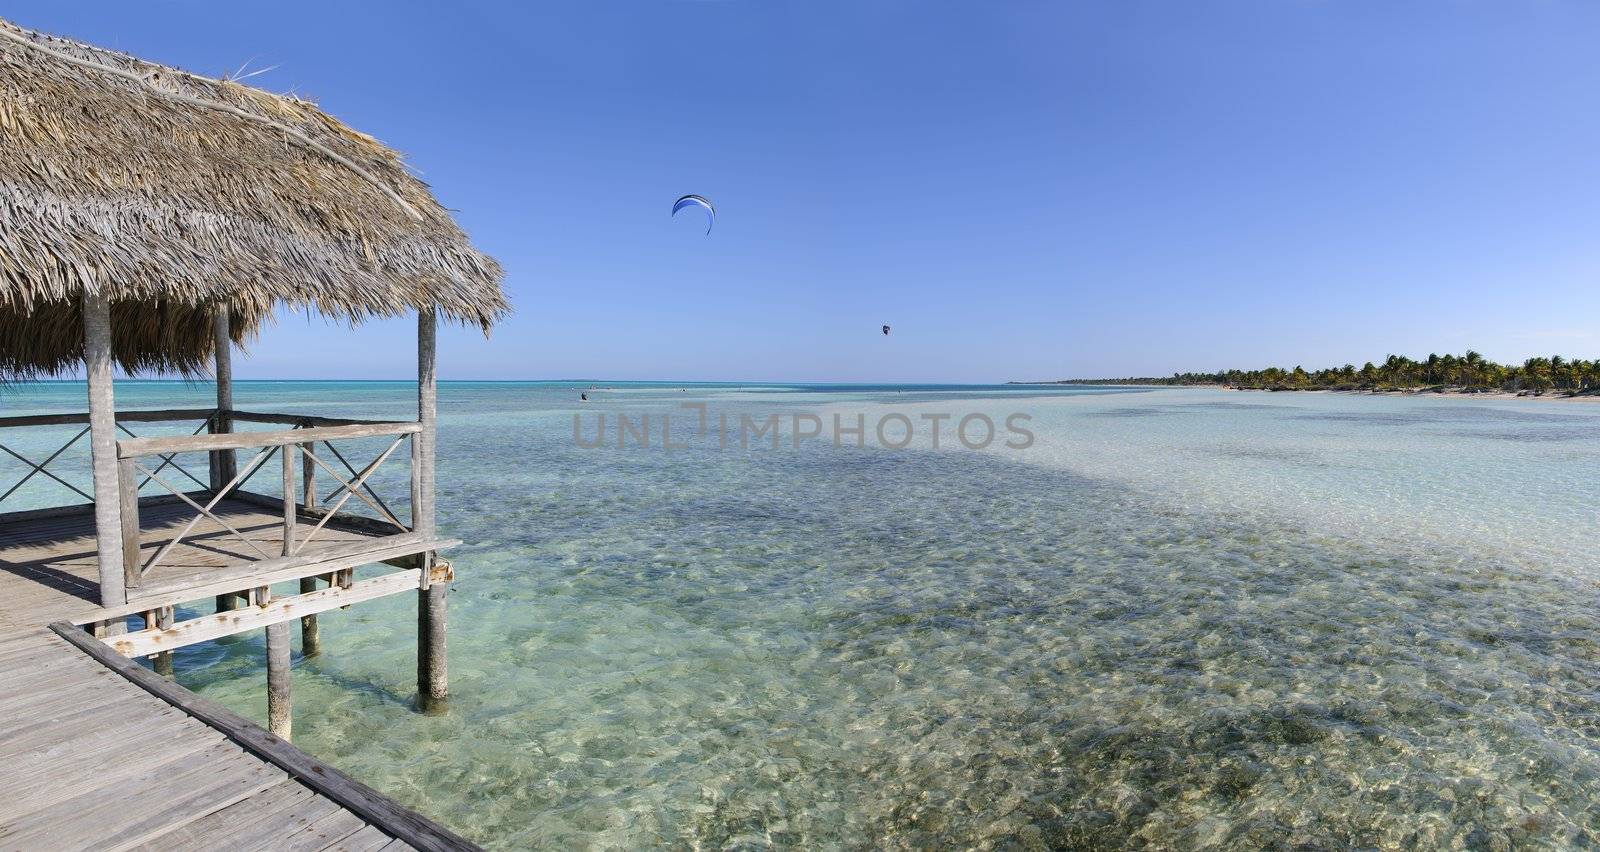 Panoramic view of tropical beach paradise on cayo coco, cuba